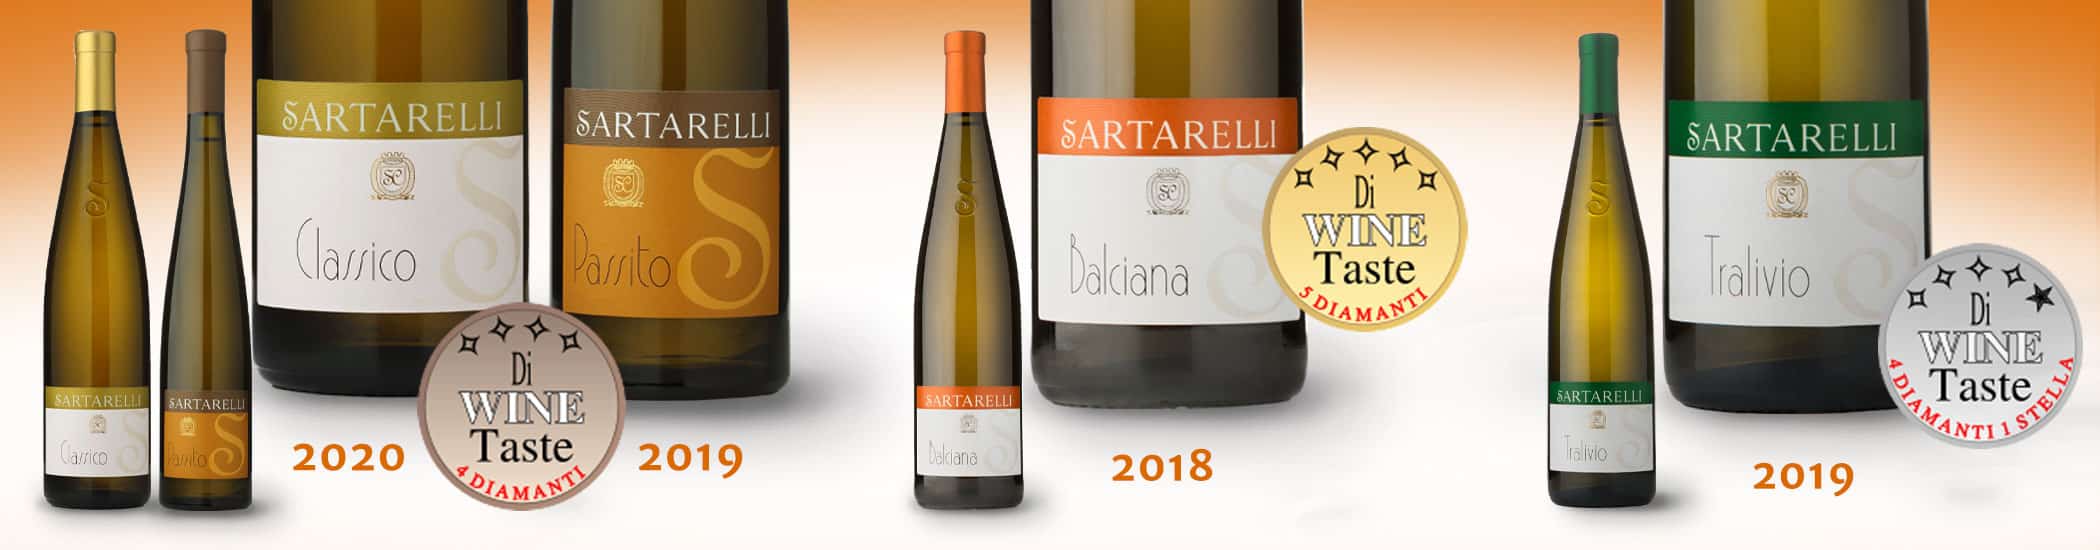 Sartarelli-DiWineTaste 2021 (News)